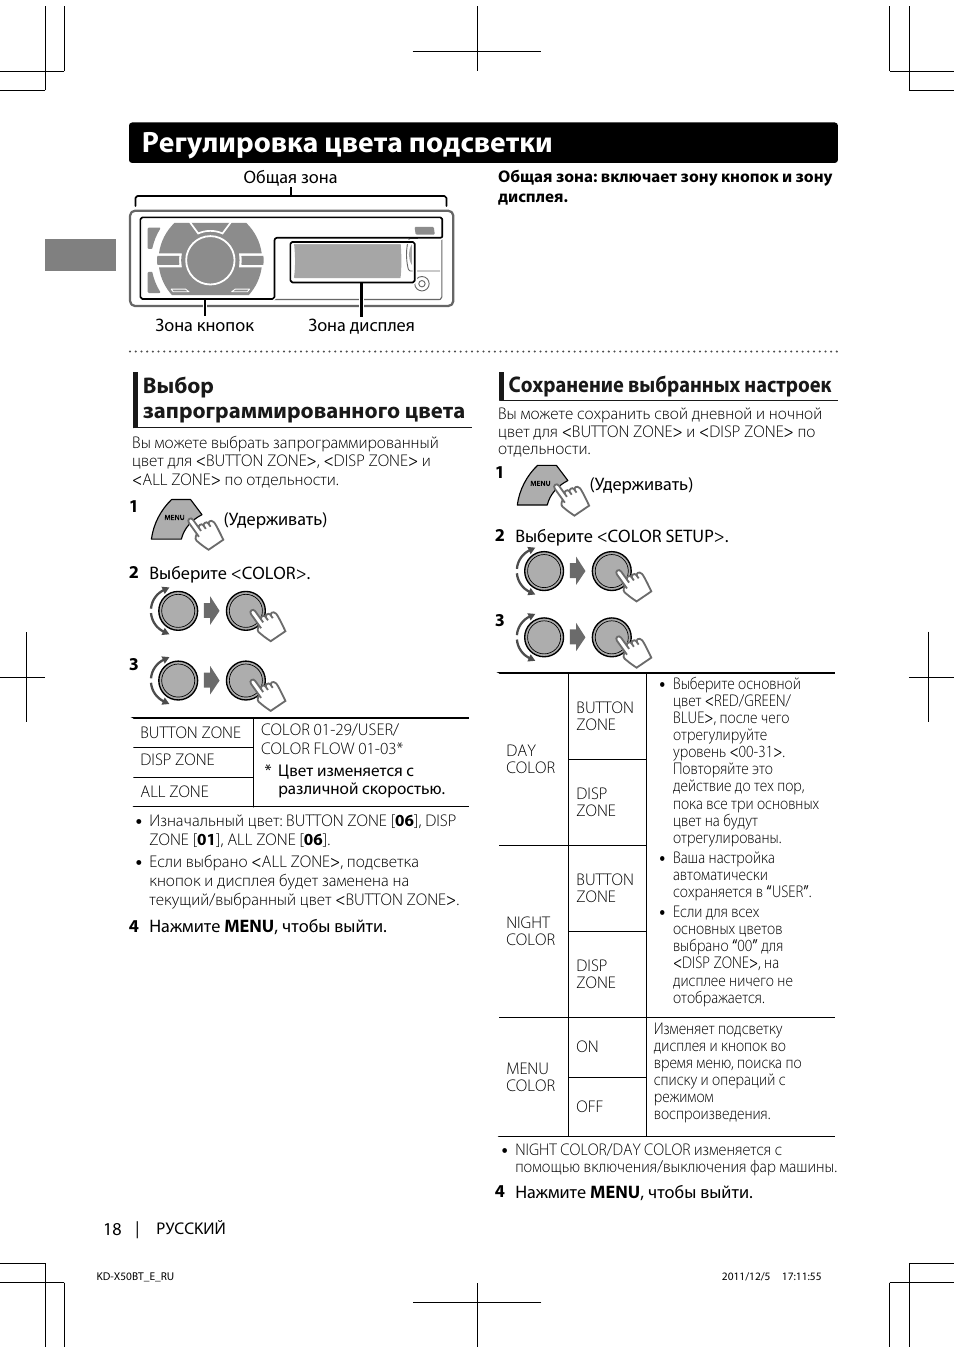 Магнитола jvc kd x50bt инструкция на русском